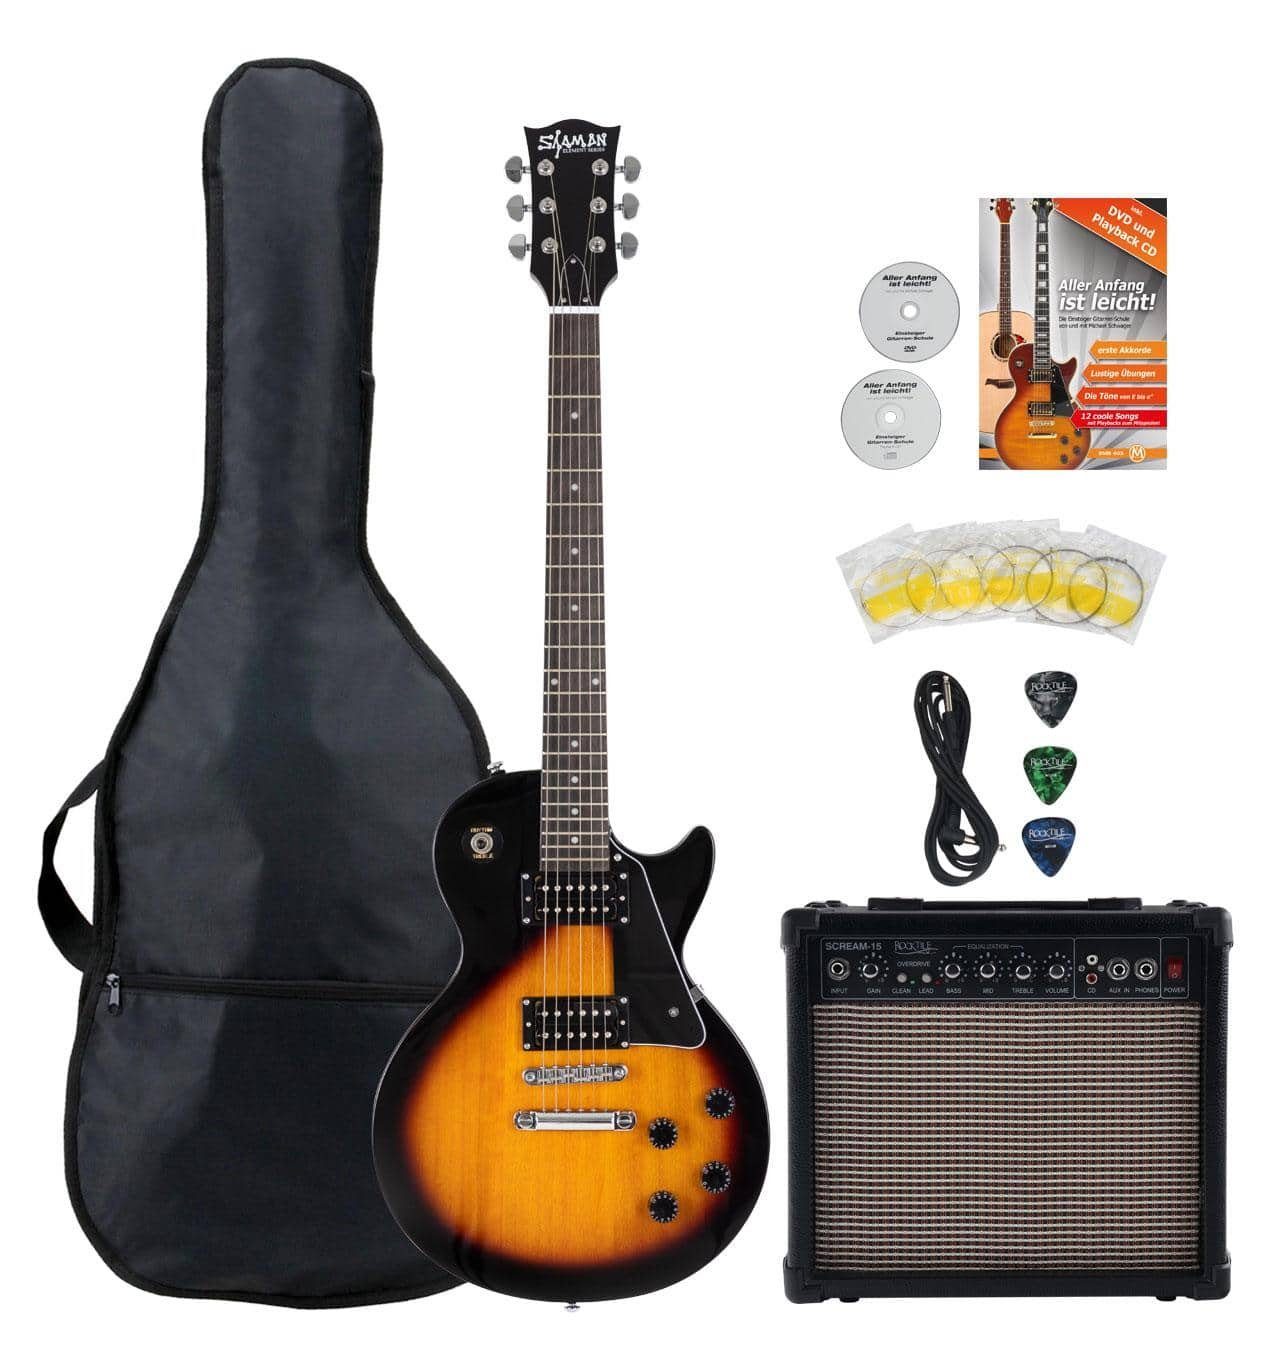 Shaman E-Gitarre SCX-100 - Single Cut-Bauweise - Mahagoni Hals - Macassar-Griffbrett, inkl. 15W Gitarren Amp & 5 teiligem Zubehörset